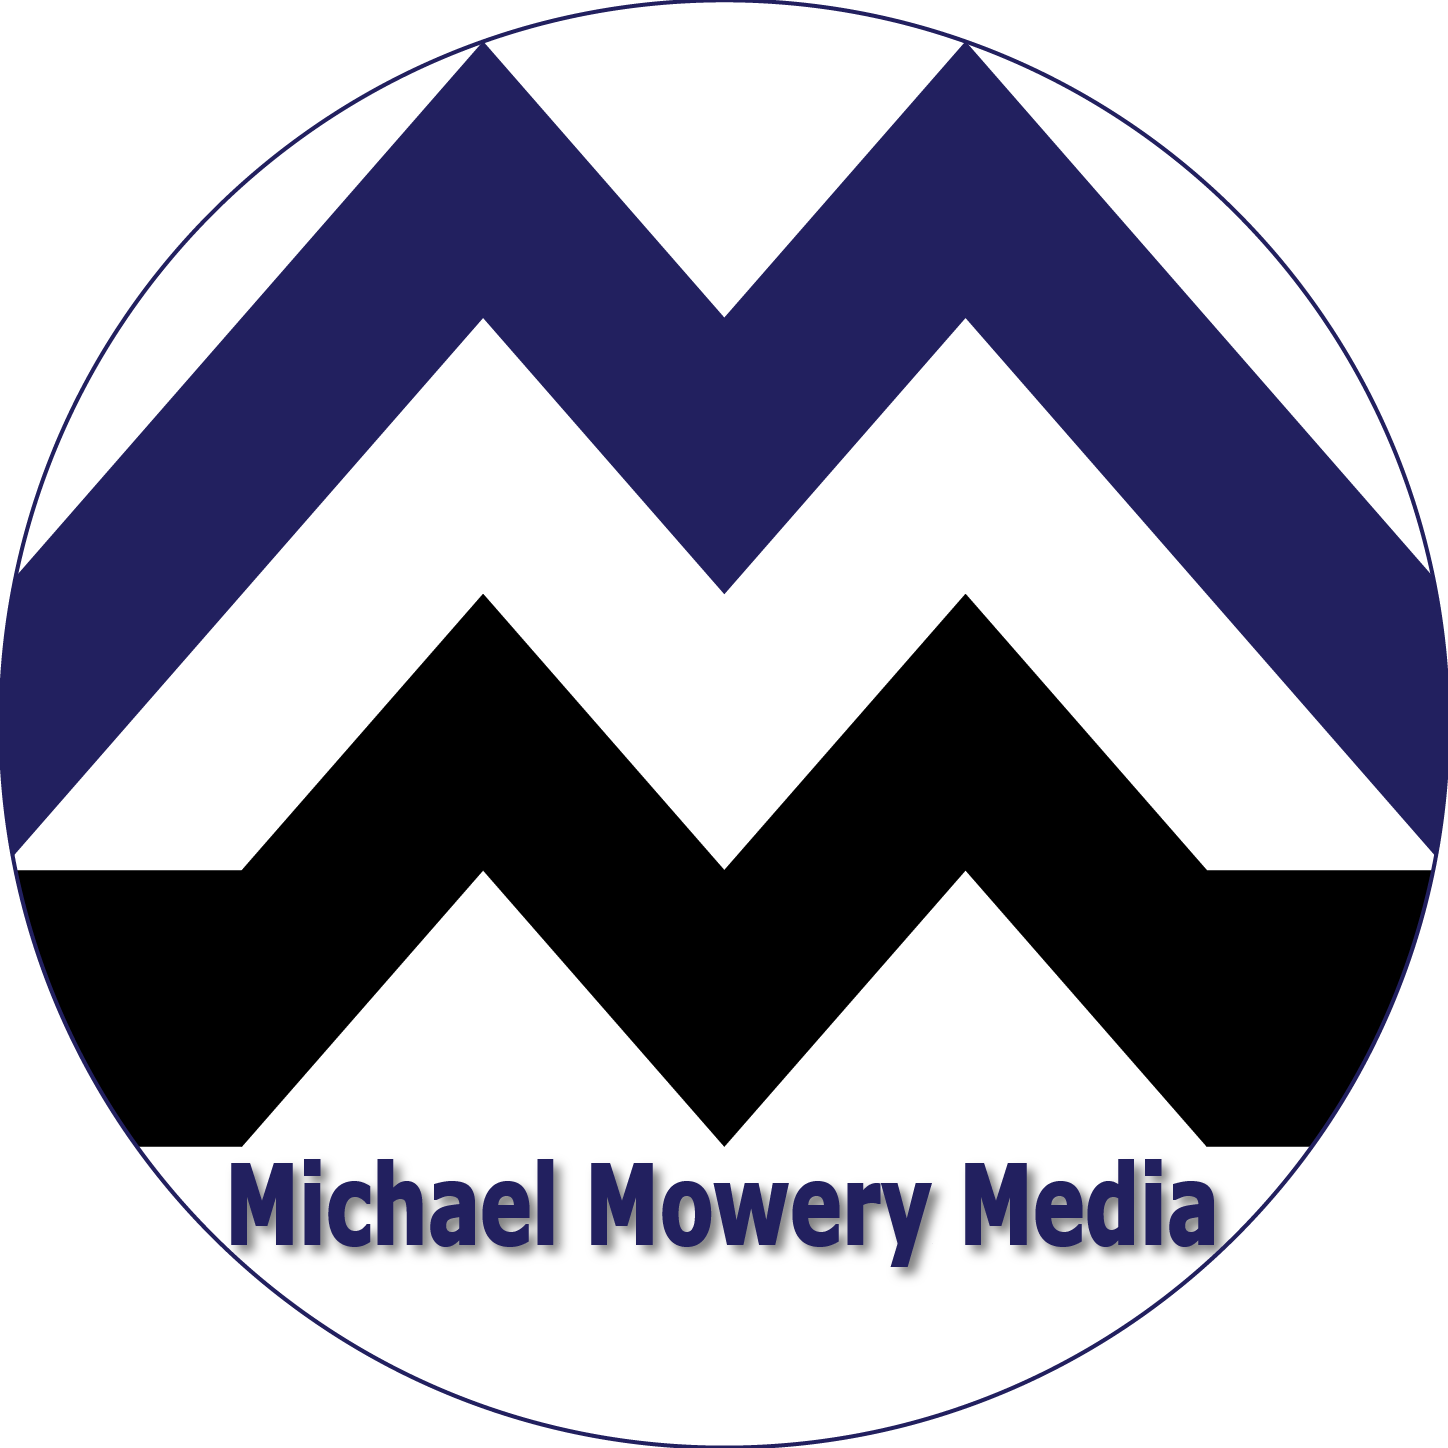 Michael Mowery Media